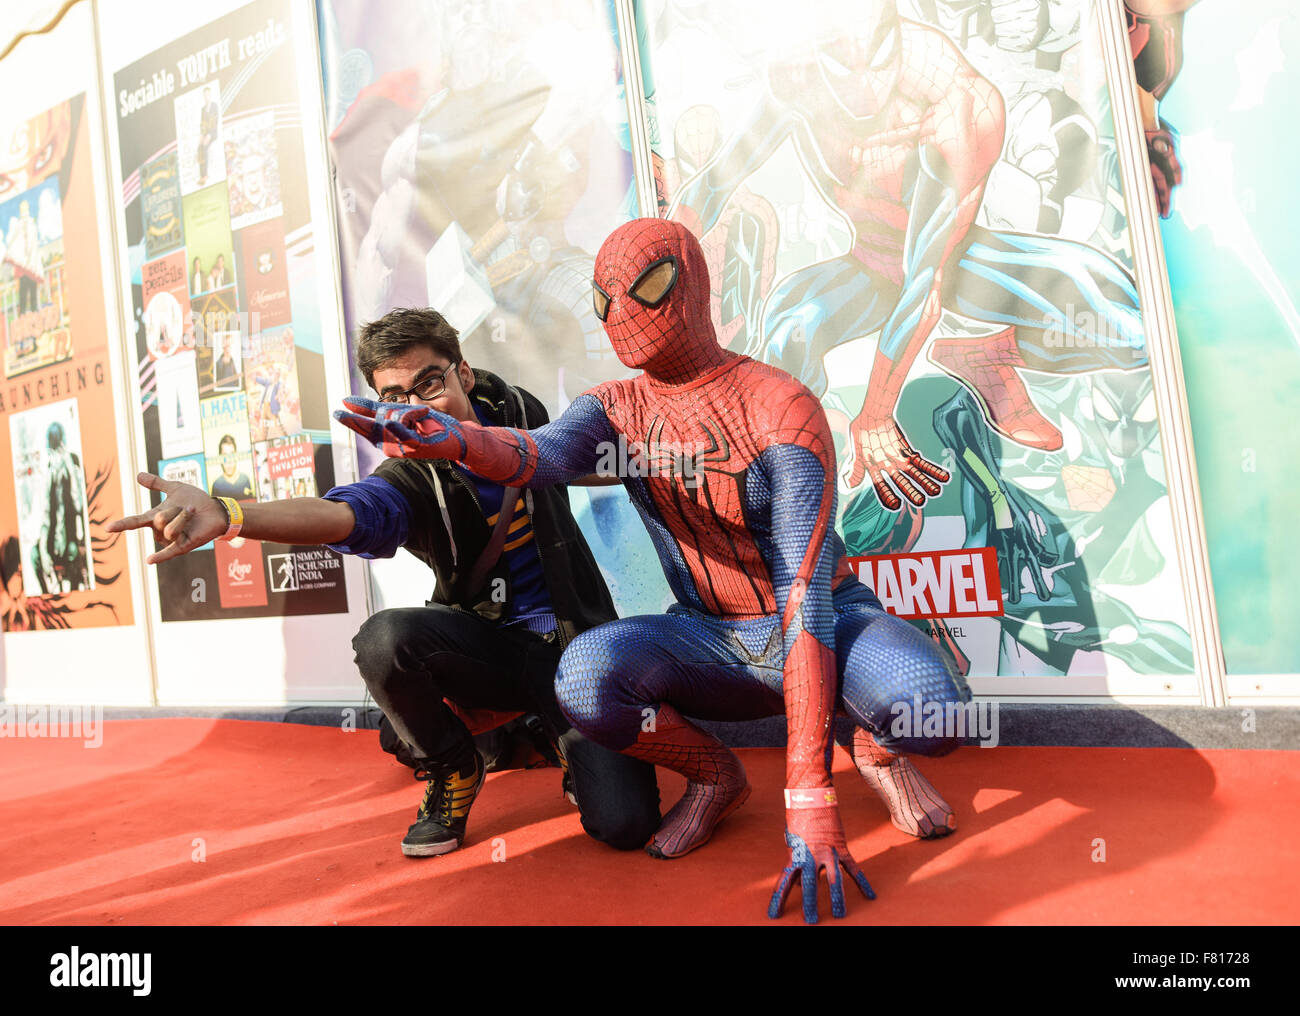 Spiderman Pose for Picture | TikTok